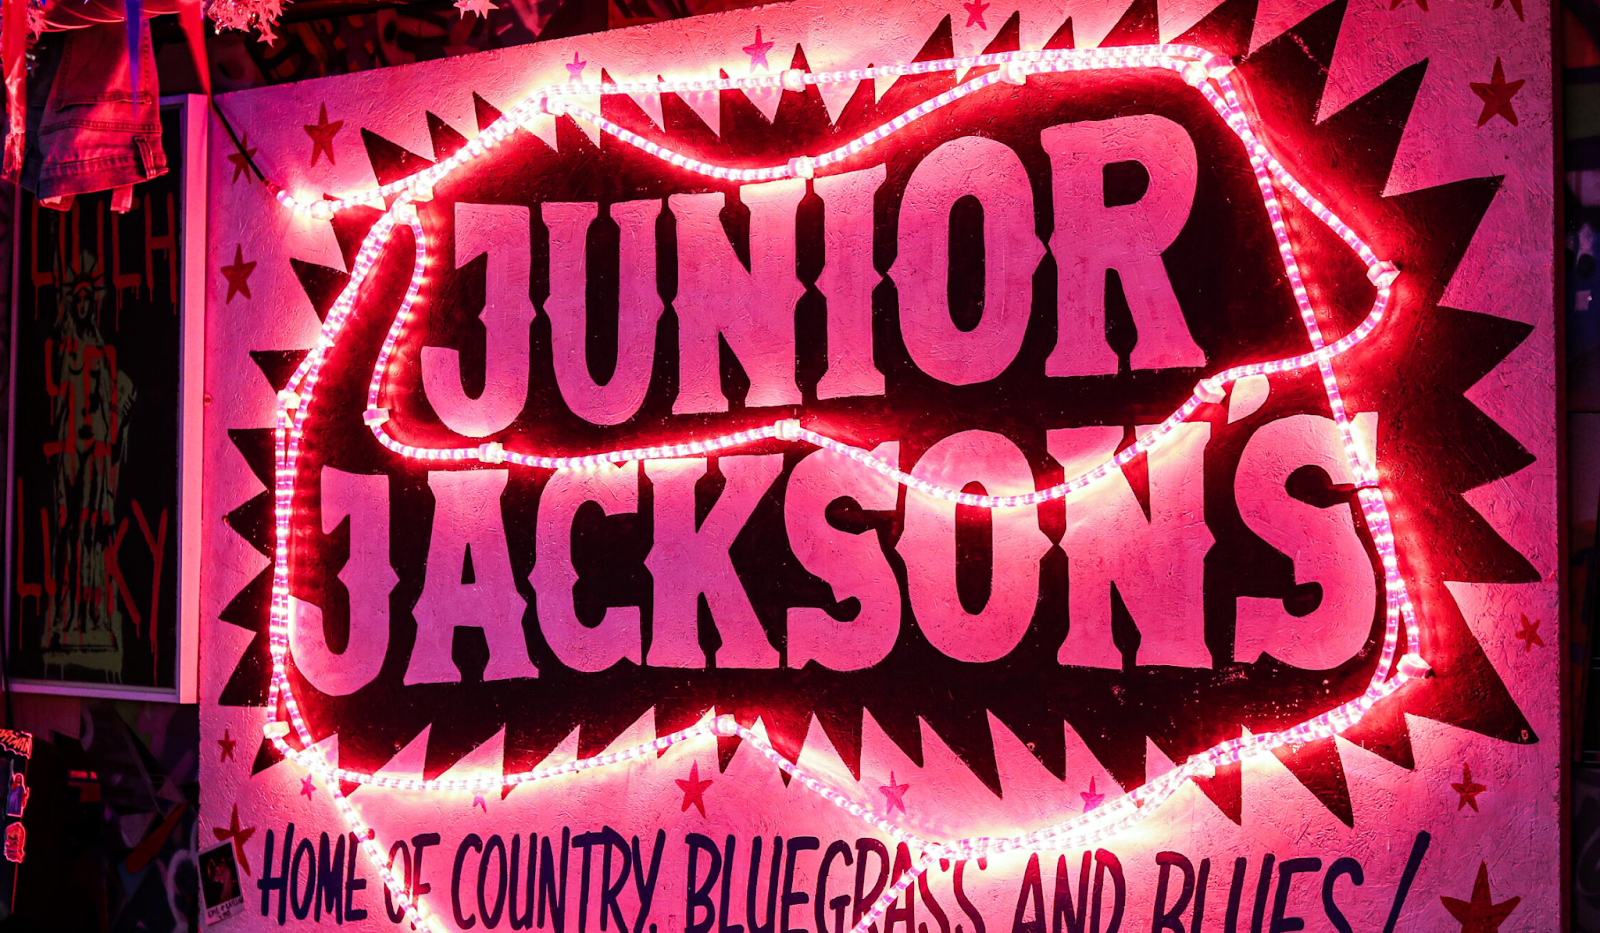 Junior Jacksons in Machester